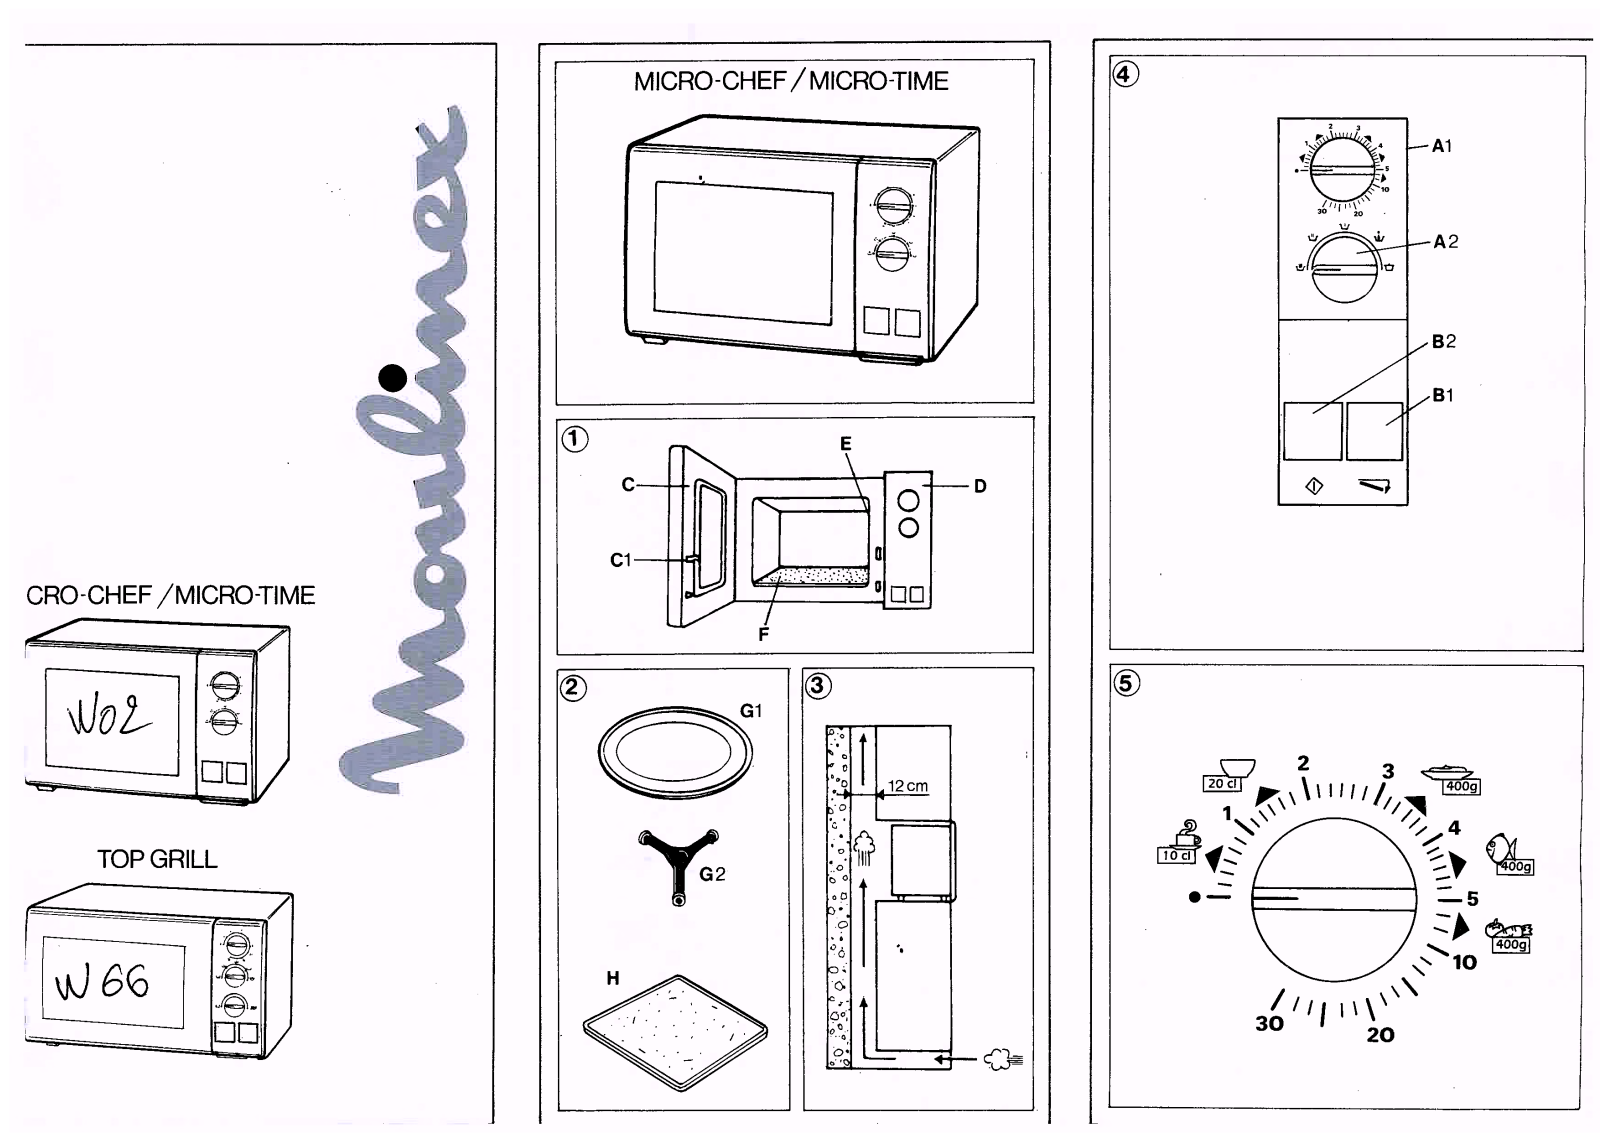 MOULINEX MICROCHEF W02 User Manual